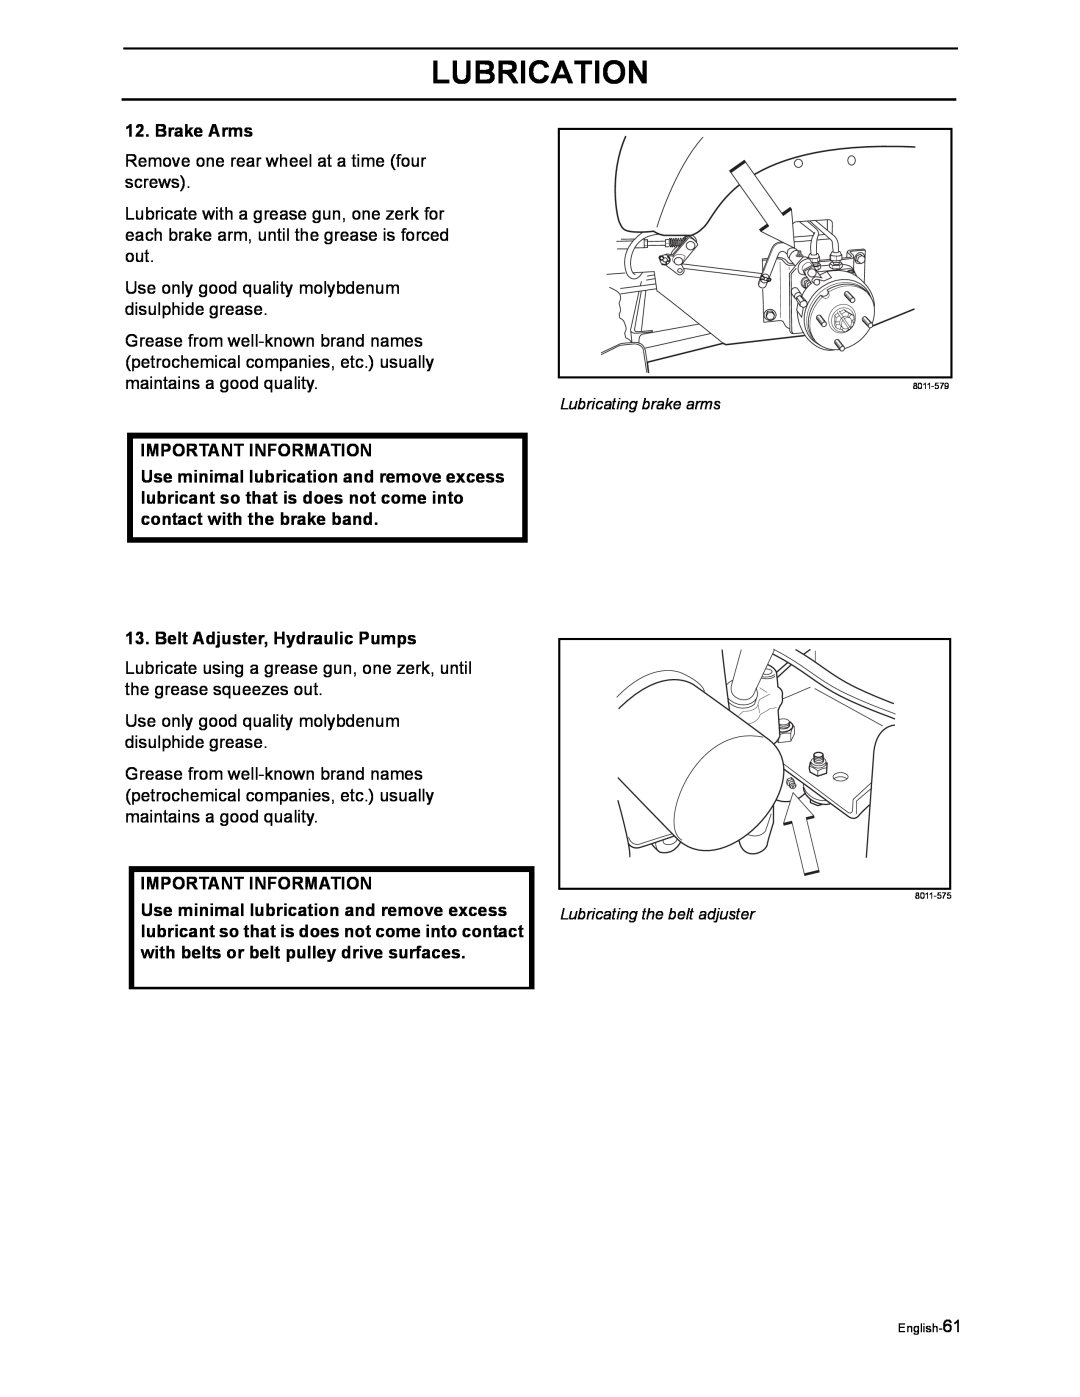 Husqvarna iZ4817SKAA/968999356 manual Brake Arms, Belt Adjuster, Hydraulic Pumps, Lubrication, Important Information 